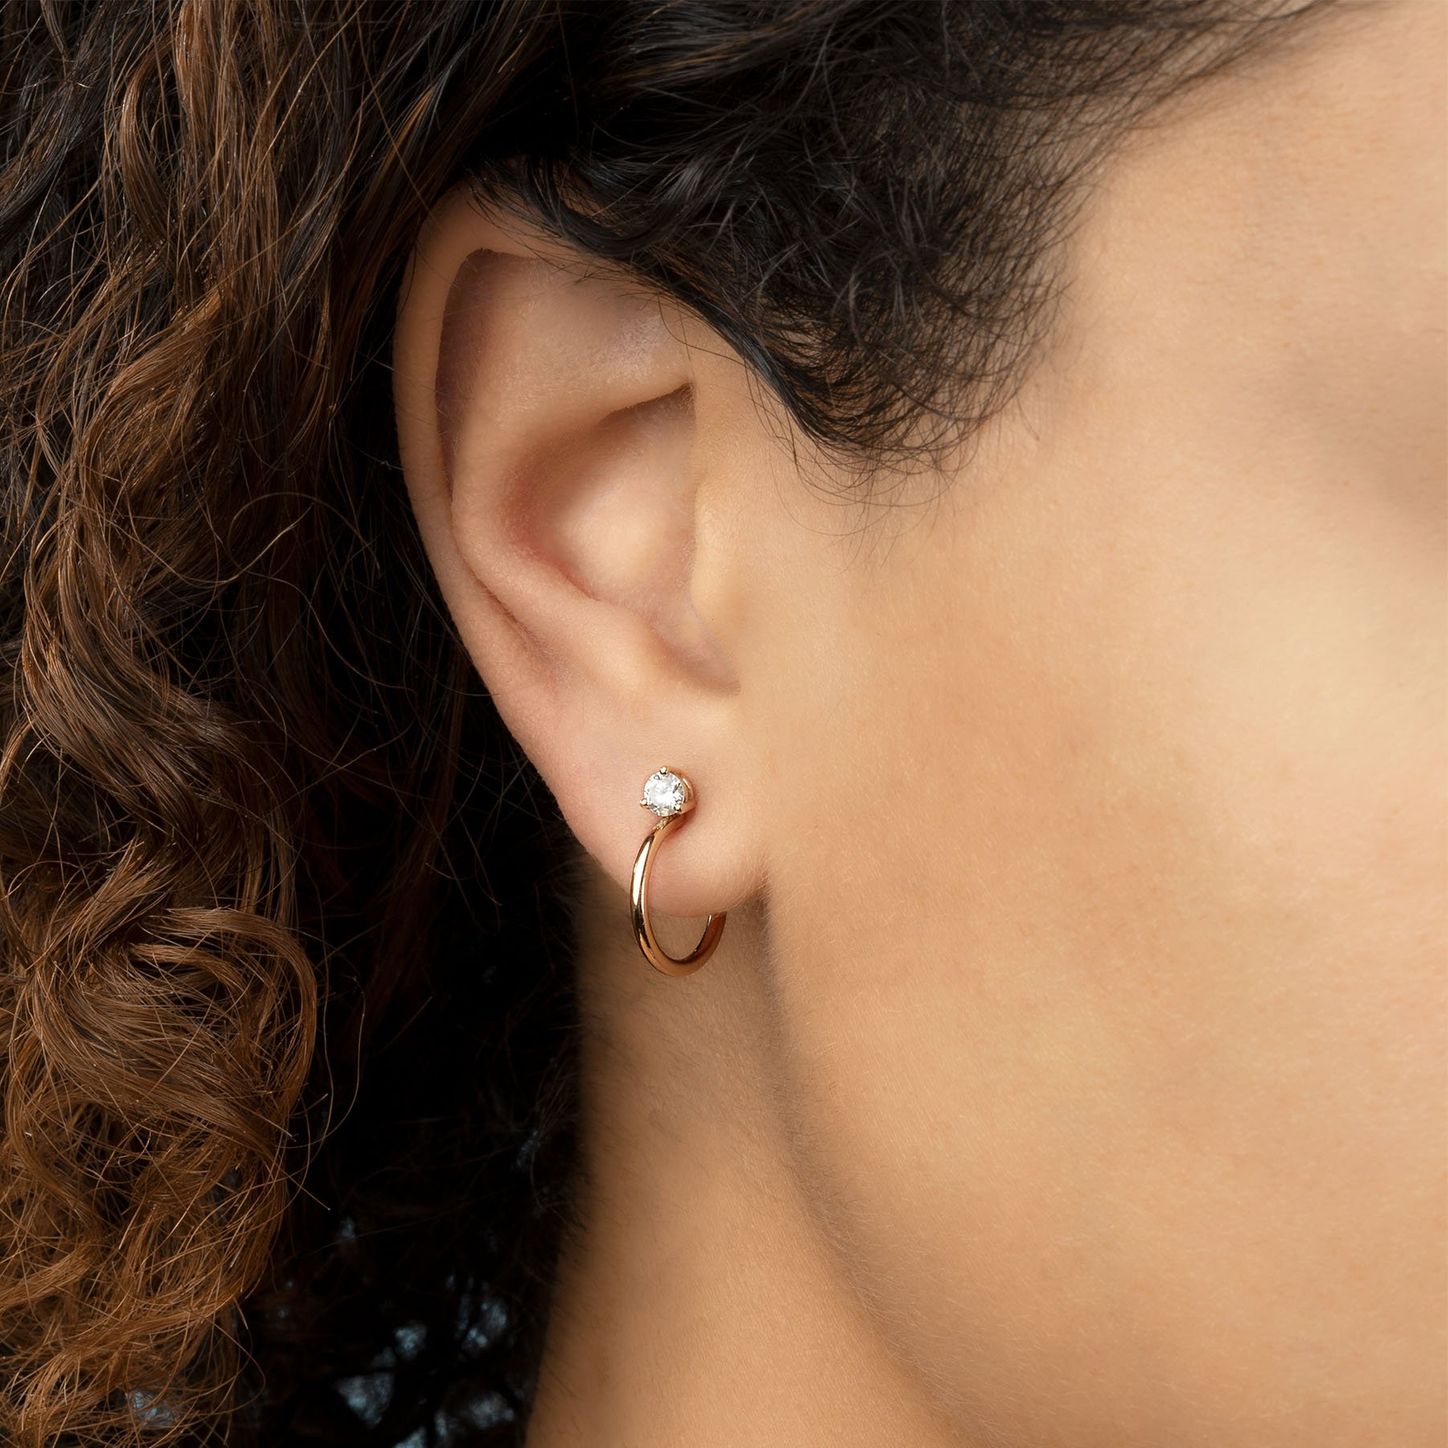 New Fashion Womens Gold/Silver Charm Triangle Earrings Elegant Ear Stud Gifts 